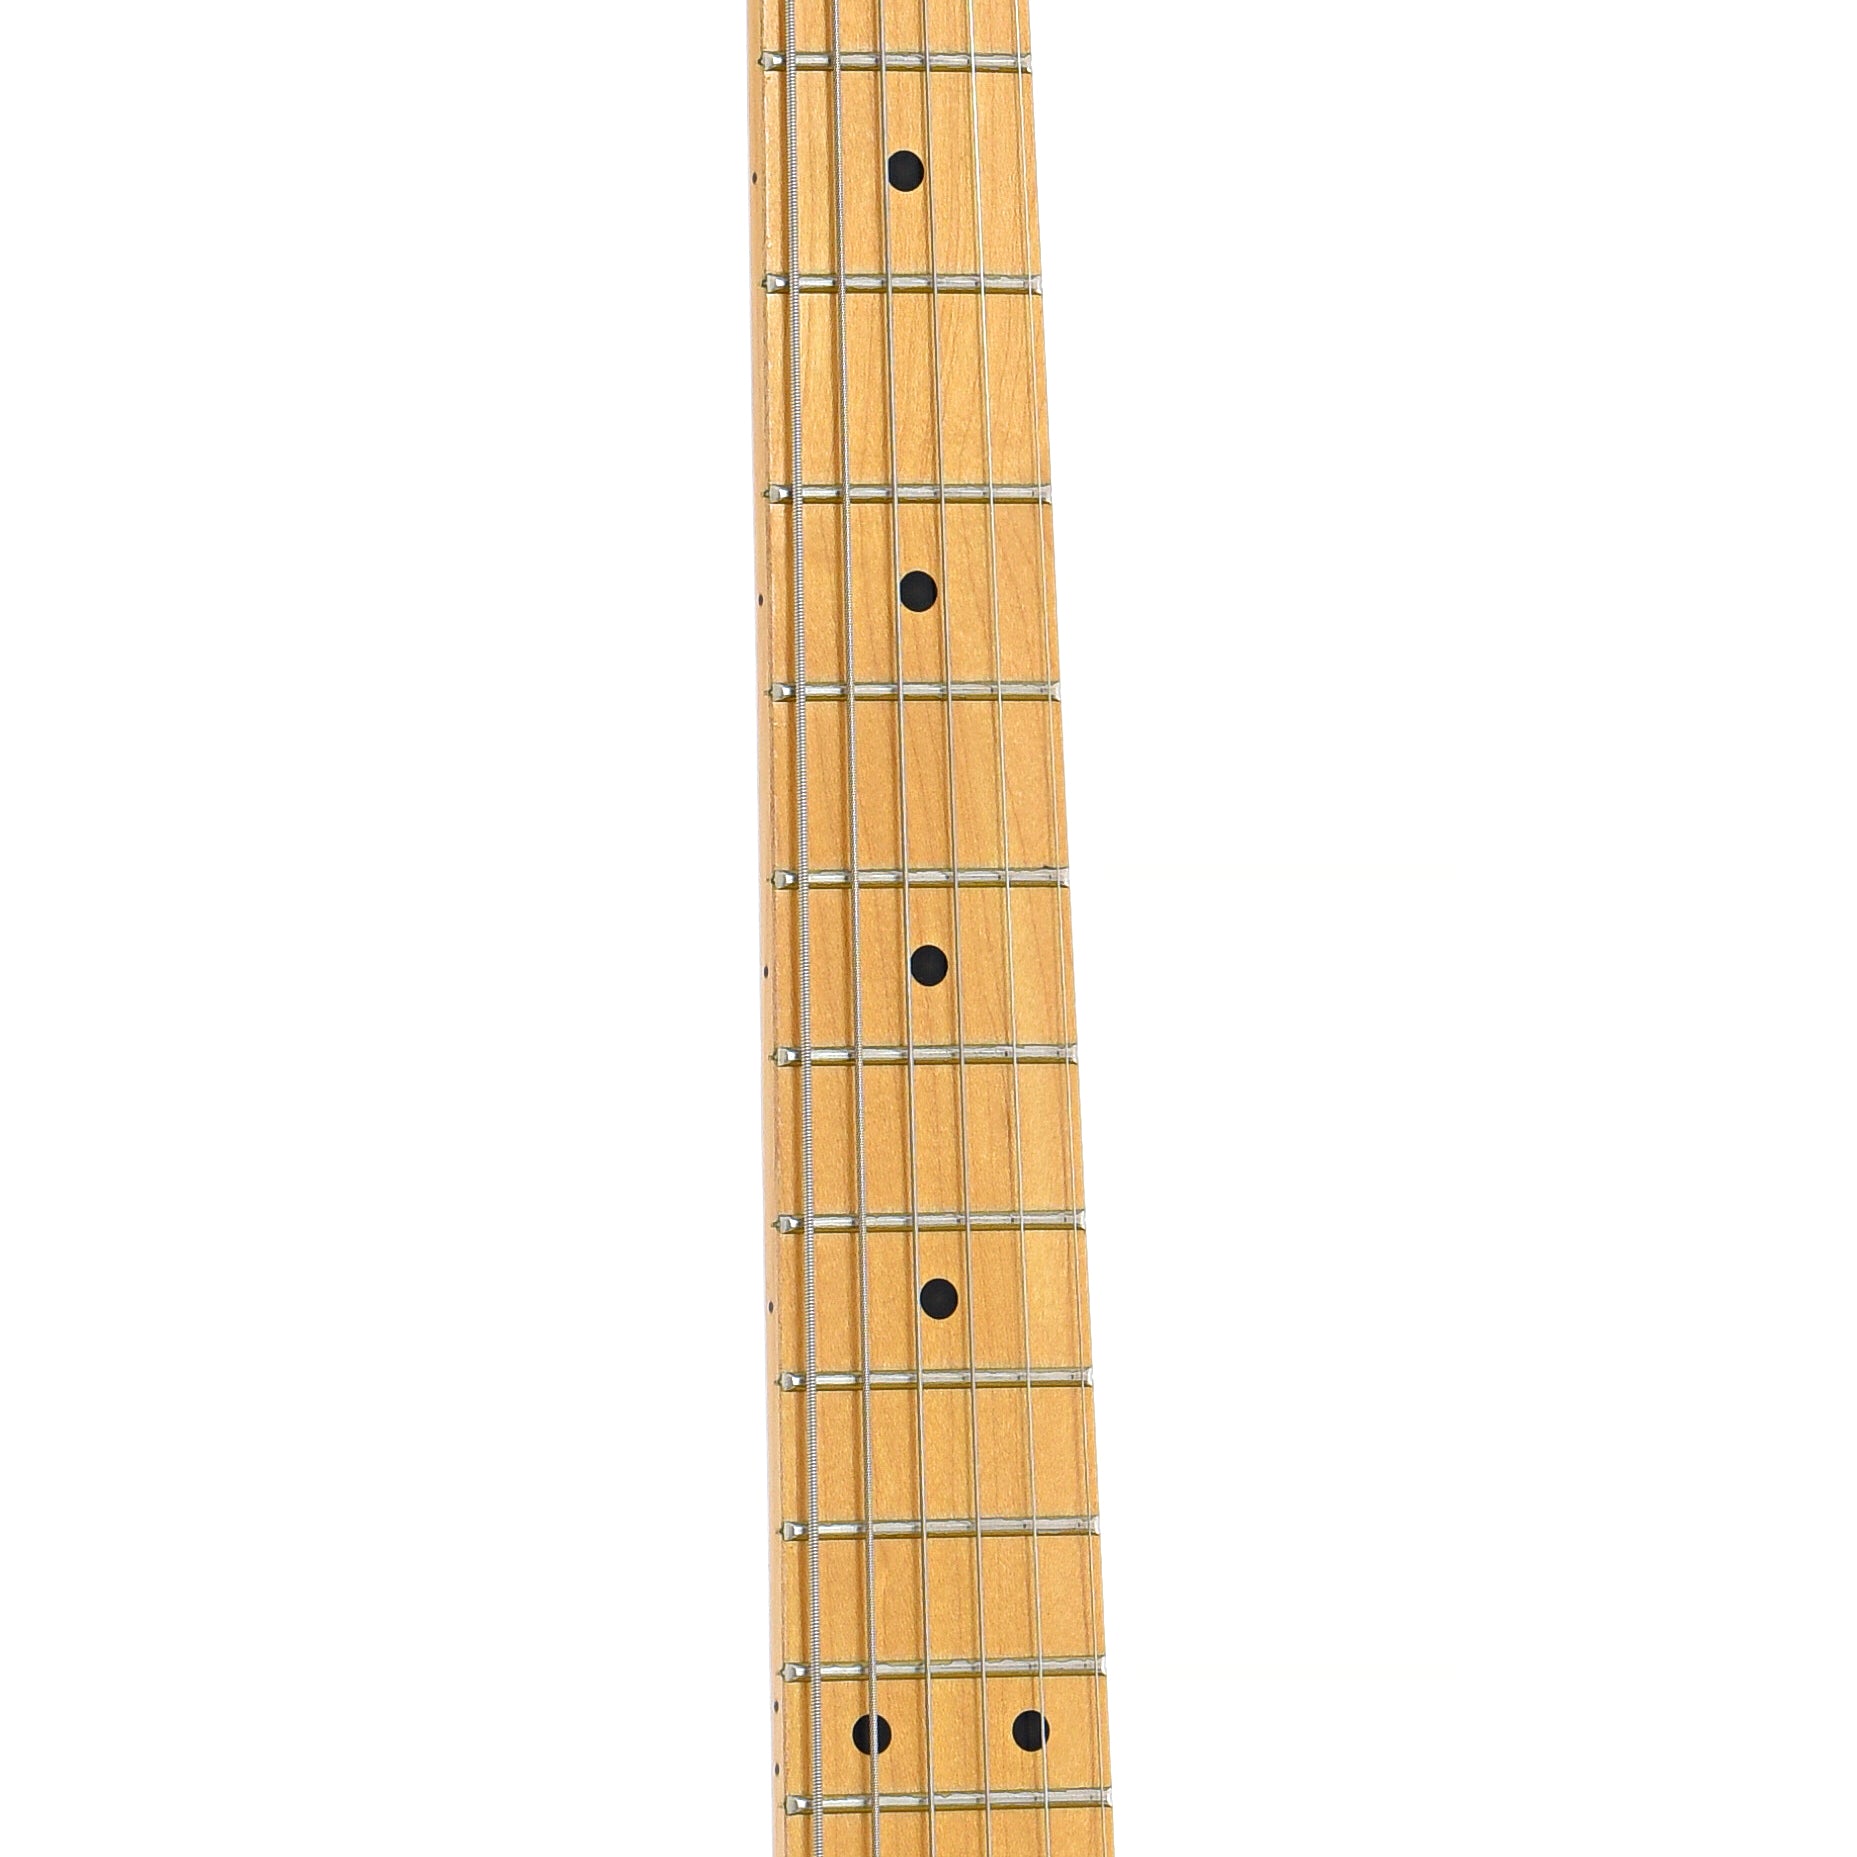 fretboard of Electra X-130 Electricx Guitar (c.1982)